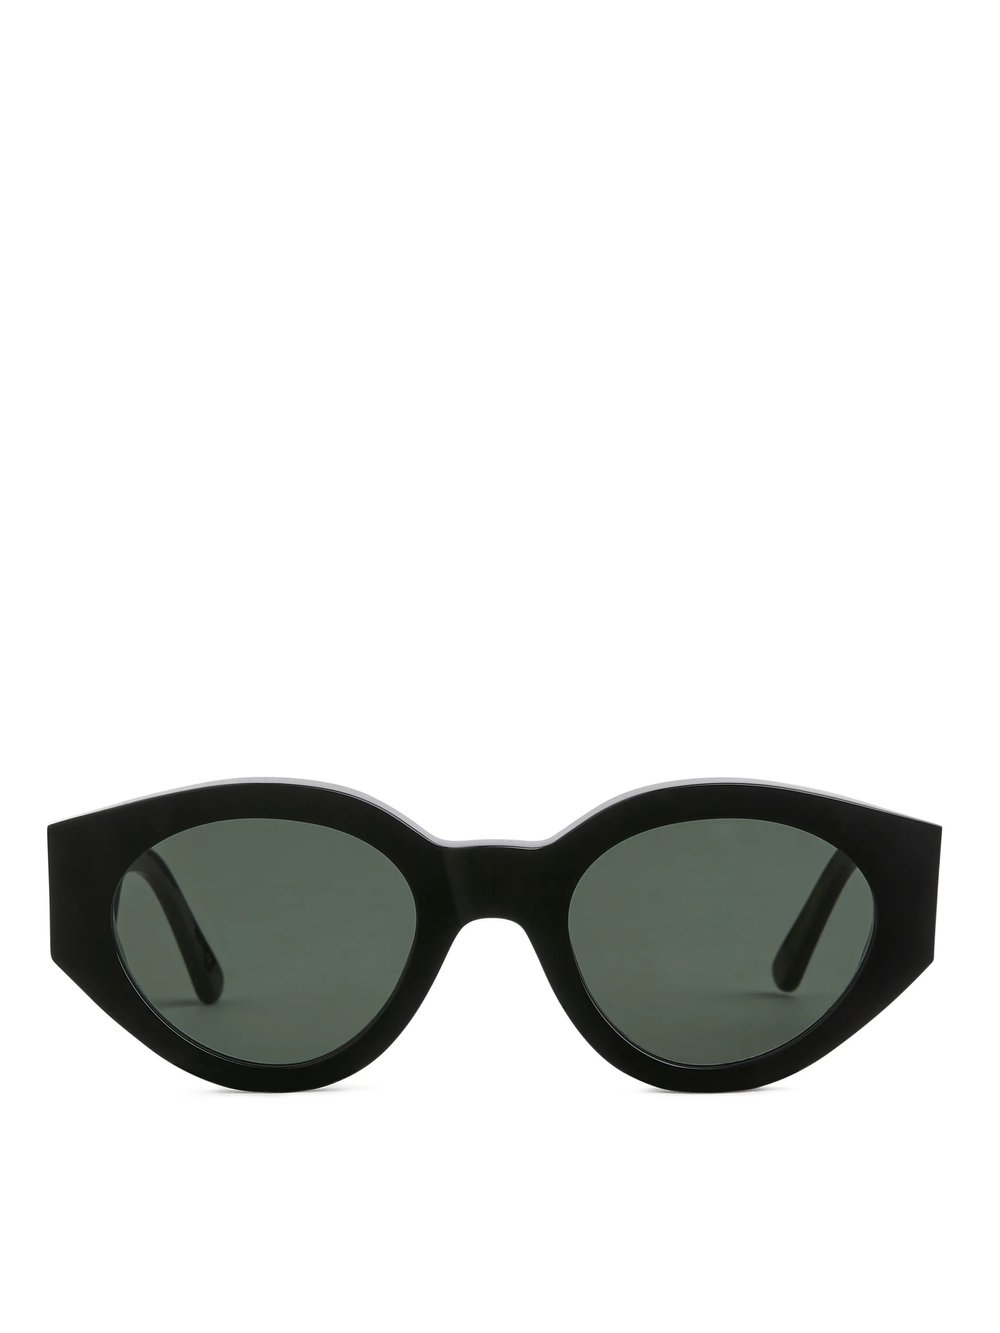 Monokel Sunglasses